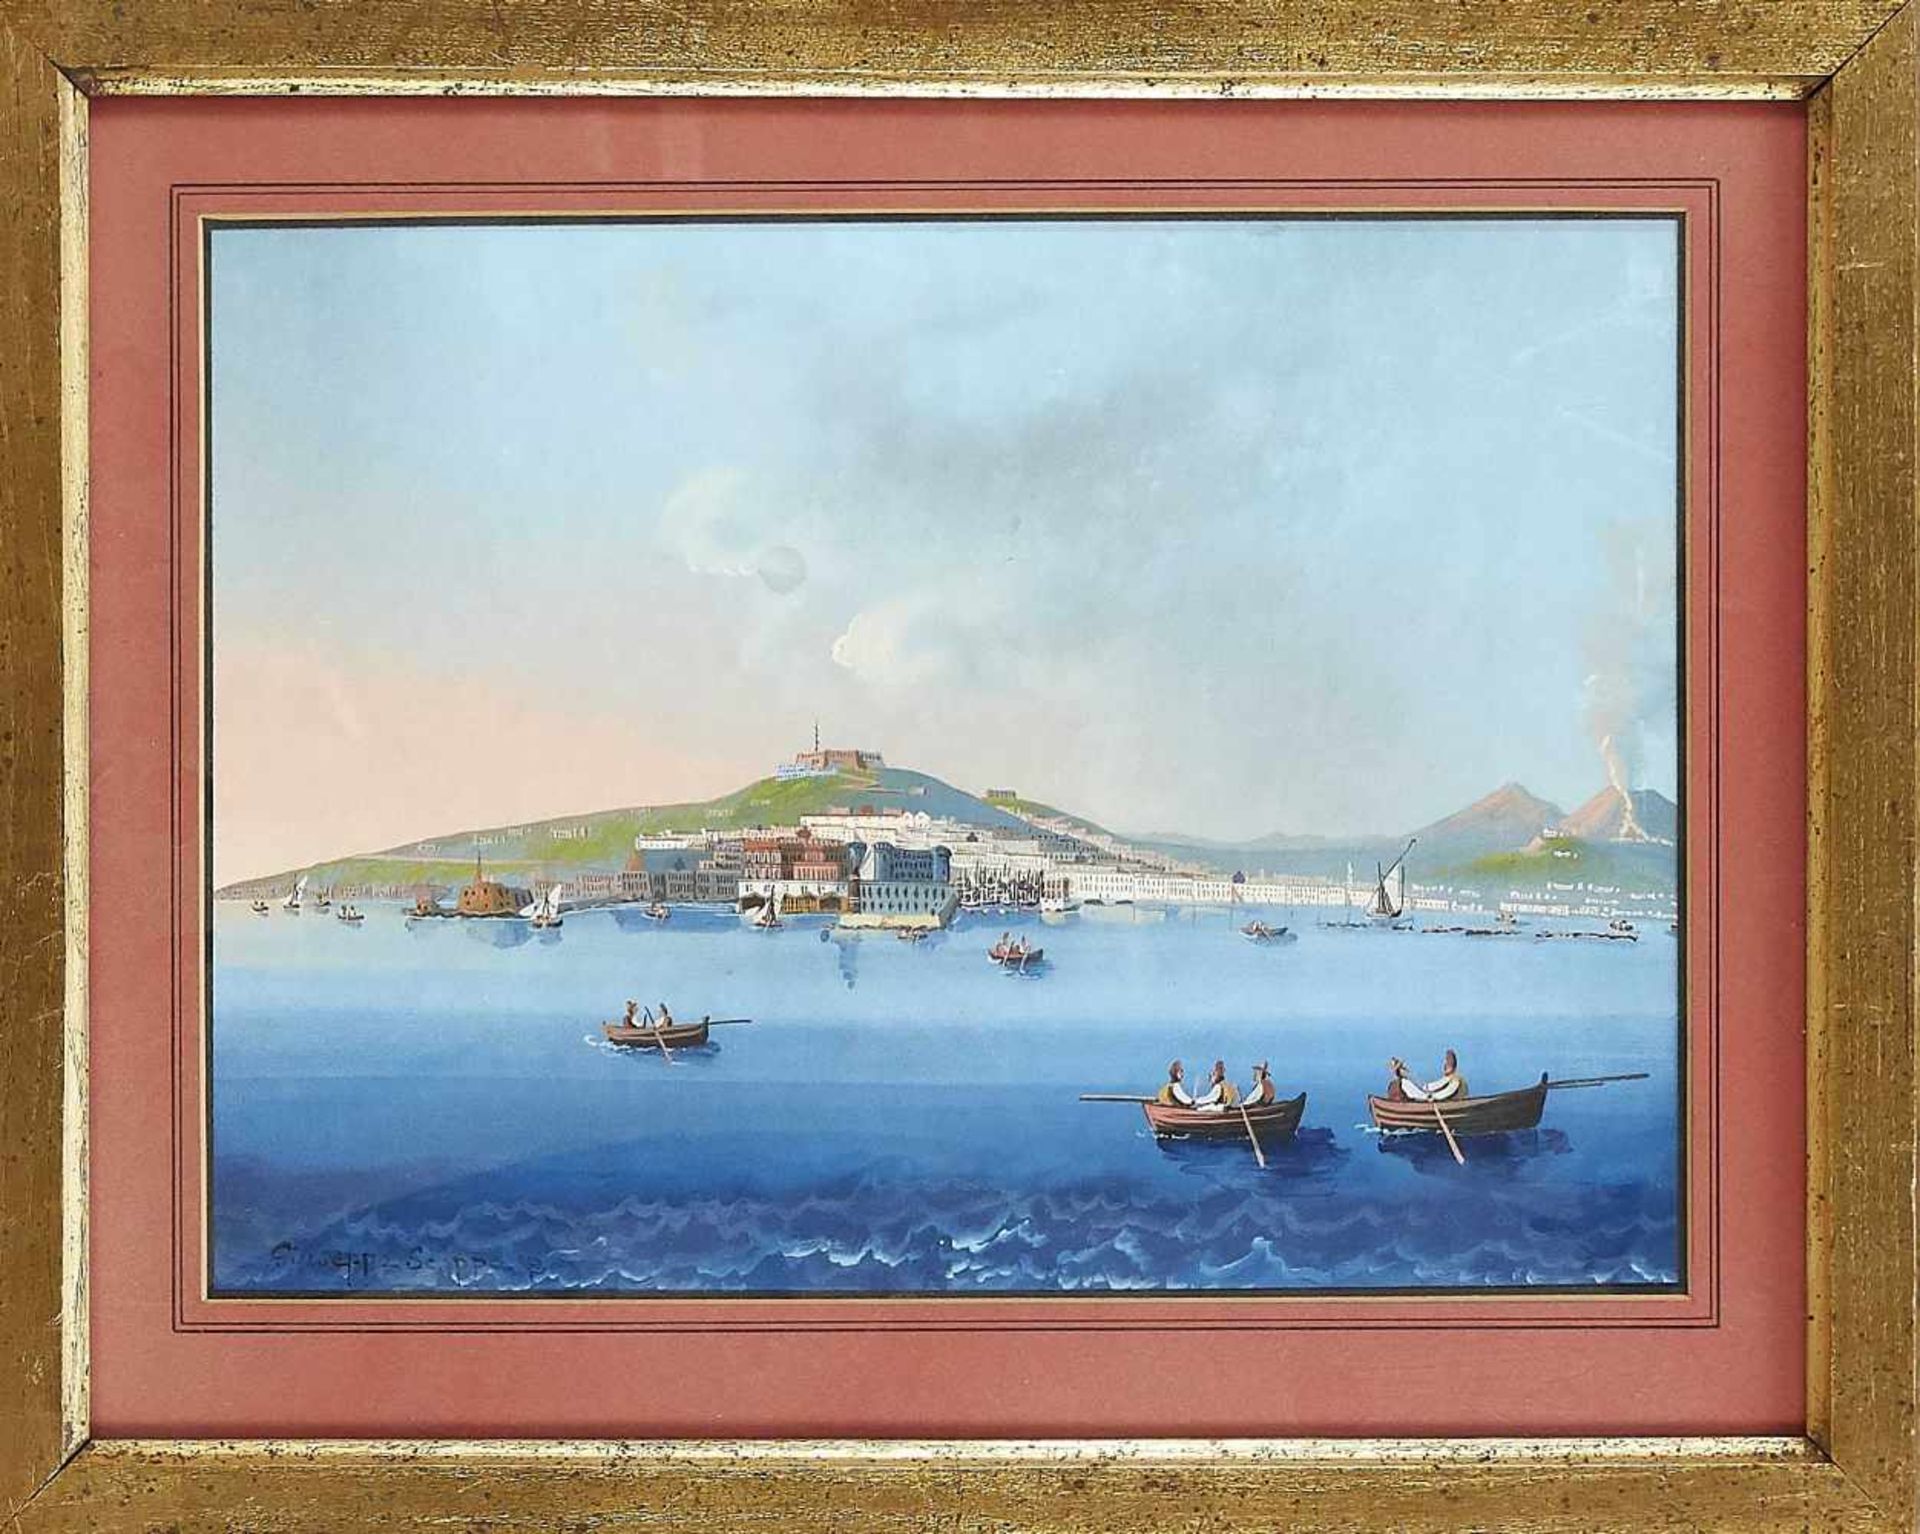 Giuseppe Gustavo Scoppa (1856-?), Italian painter of numerous views for the travelers